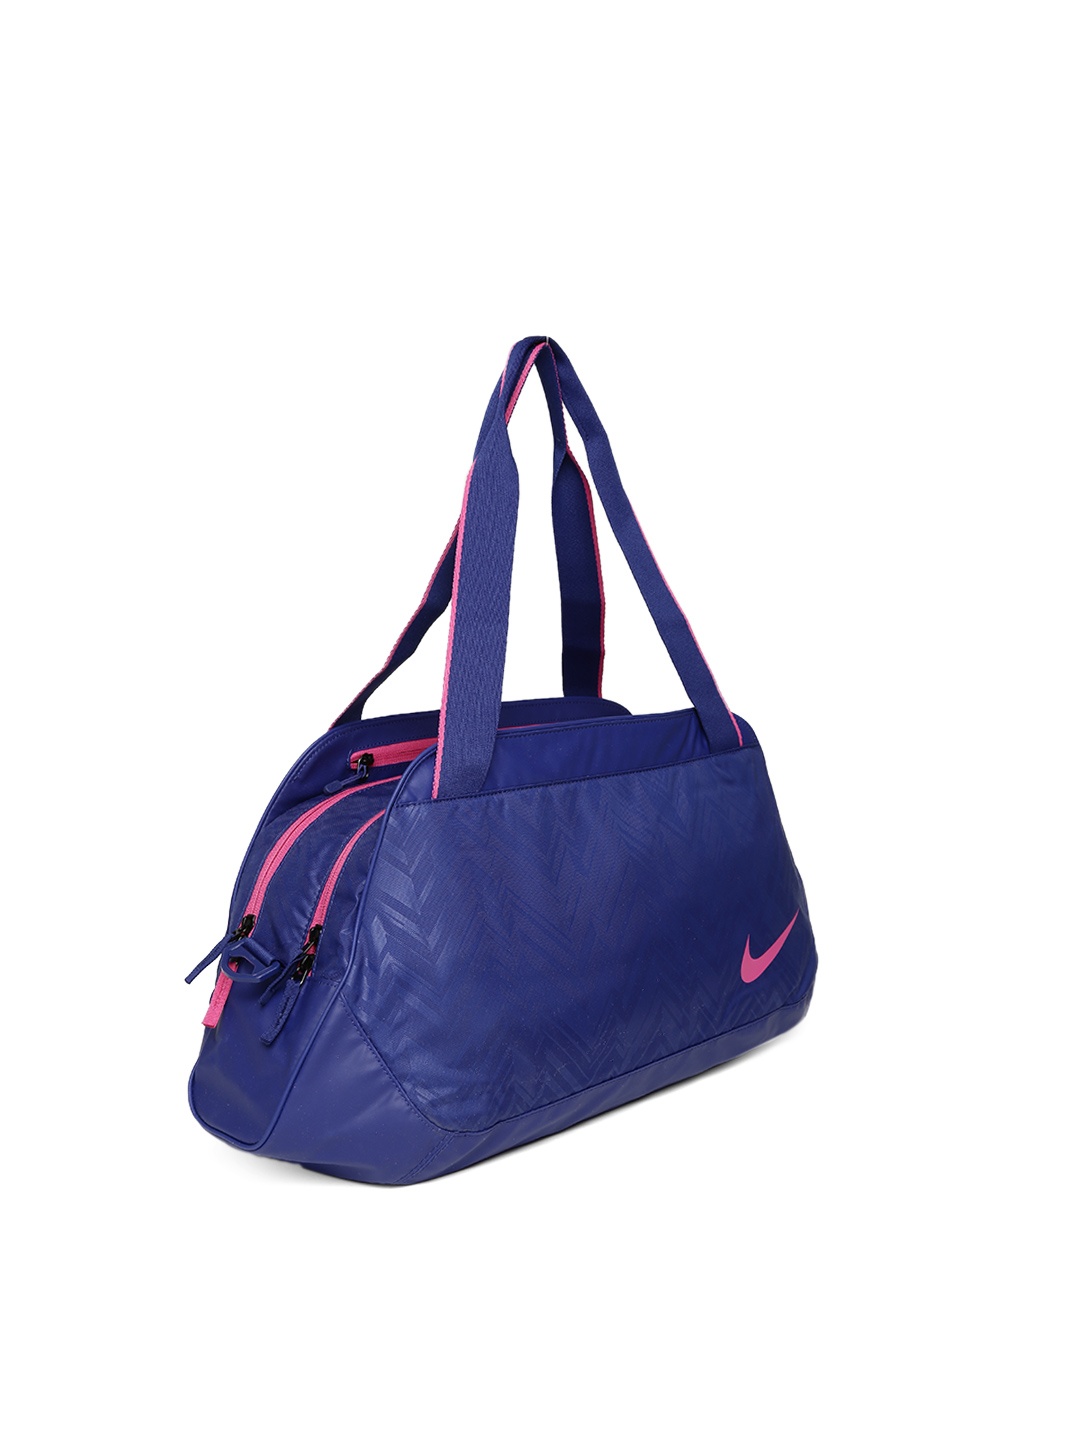 Home Accessories Women Accessories Duffle Bag Nike Duffle Bag